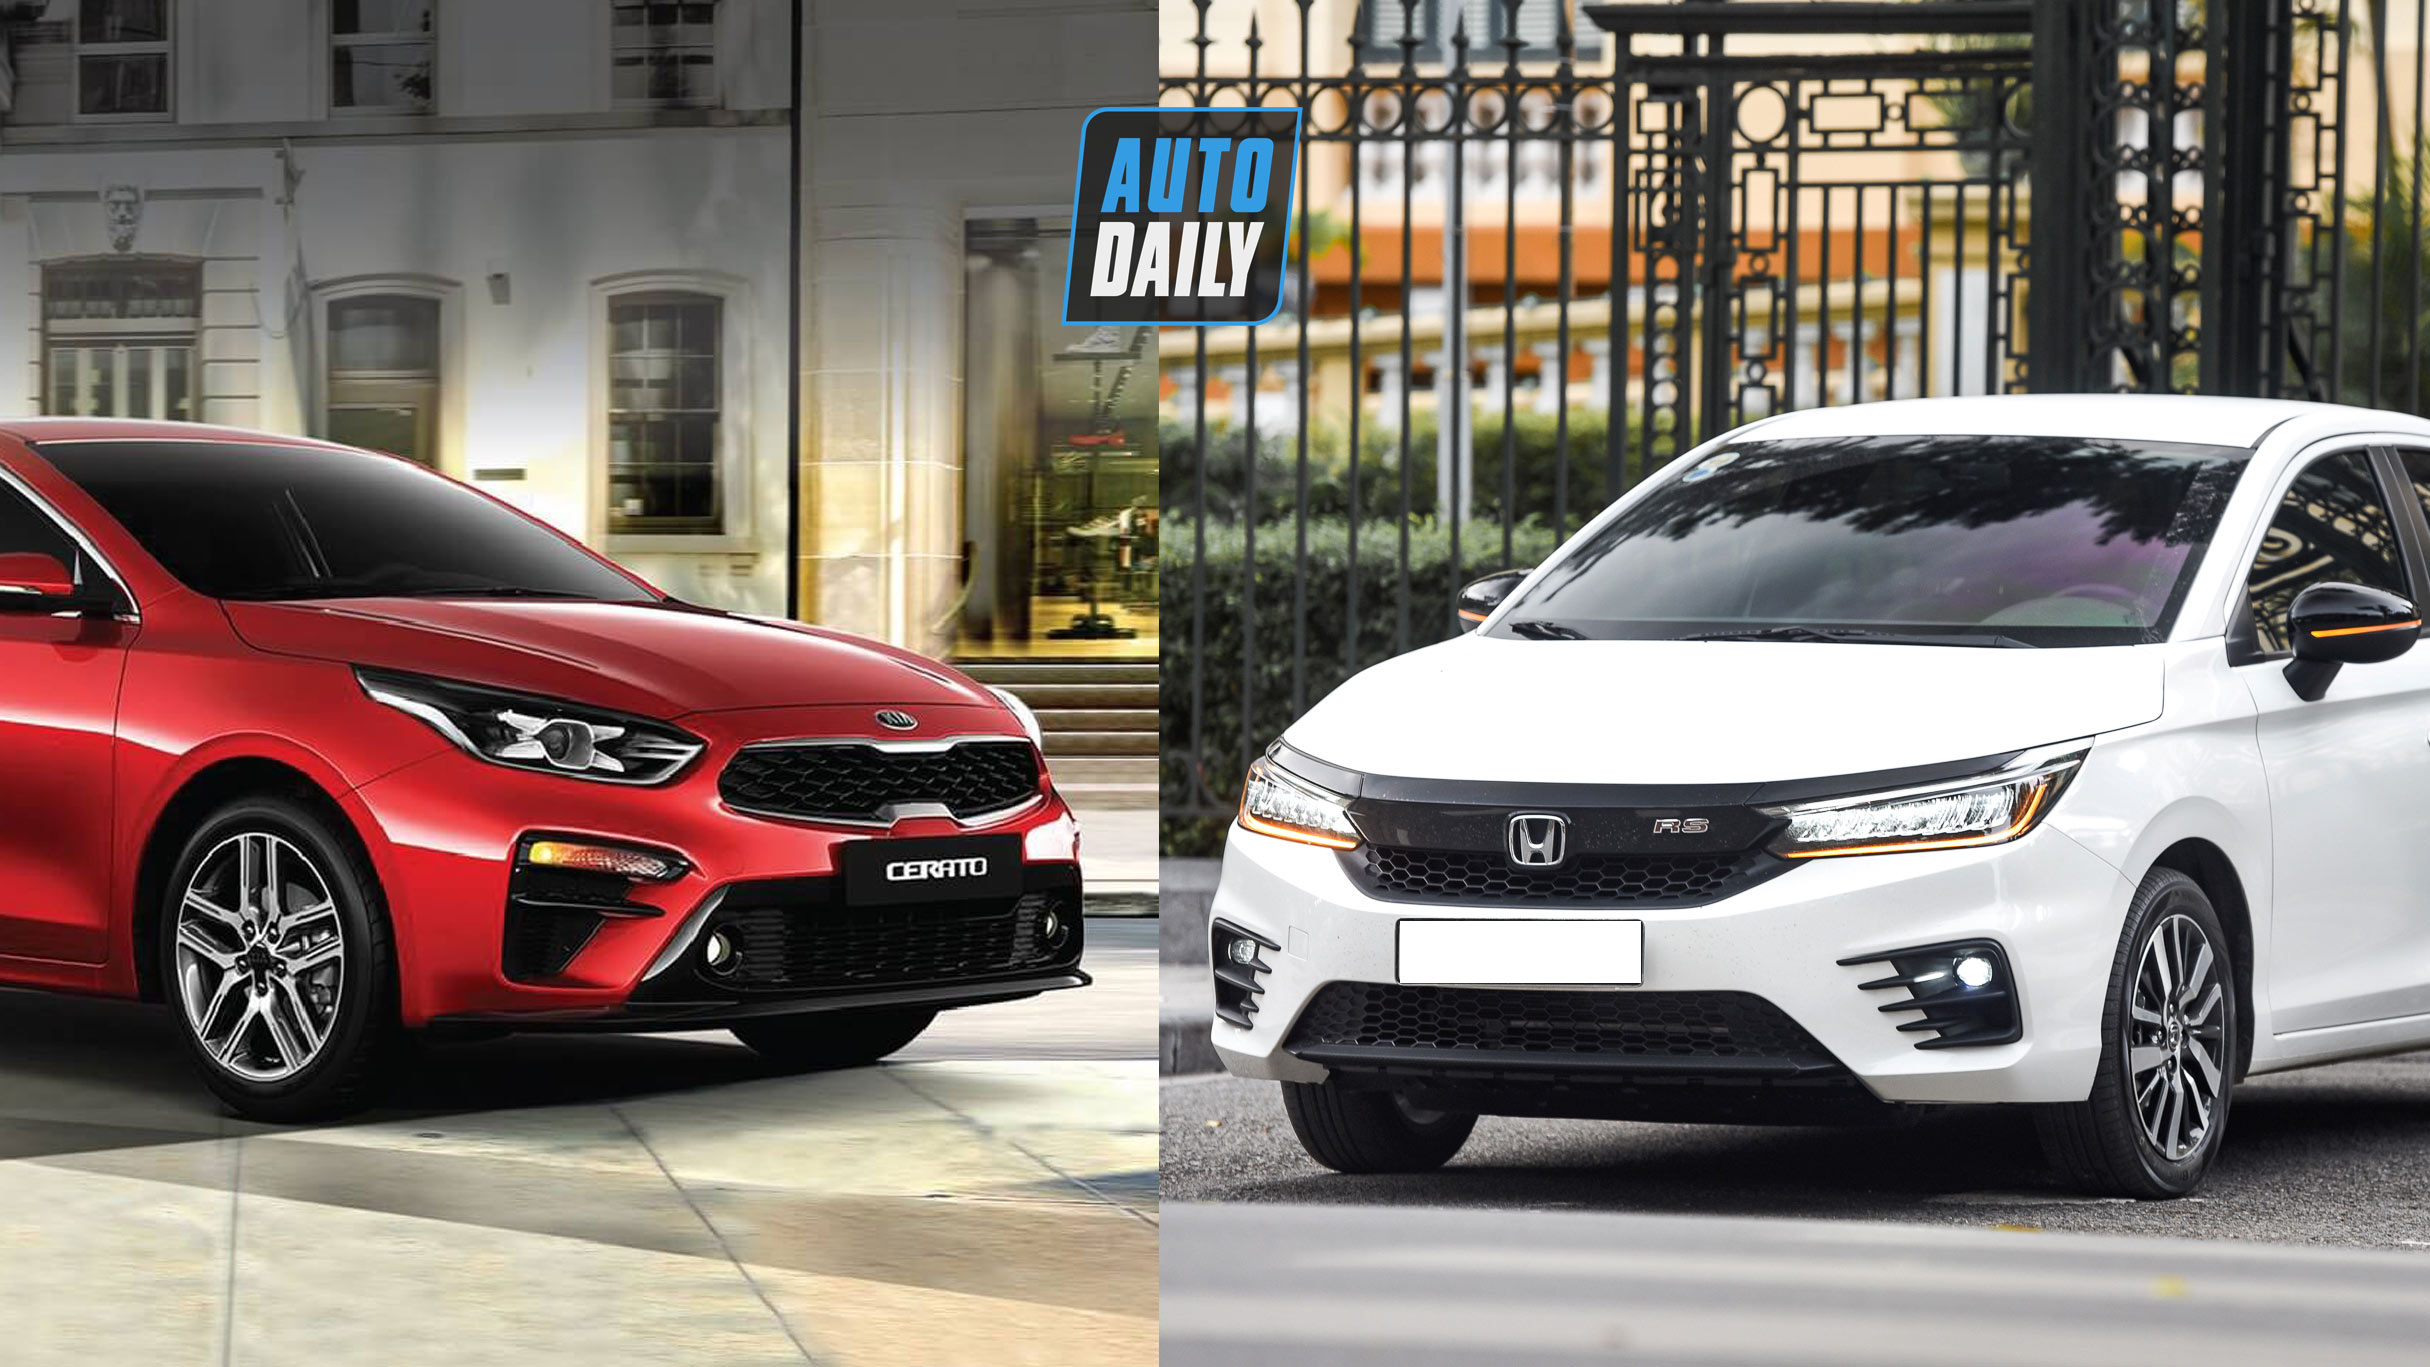 Tầm giá 600 triệu đồng, chọn Kia Cerato Luxury hay Honda City RS?